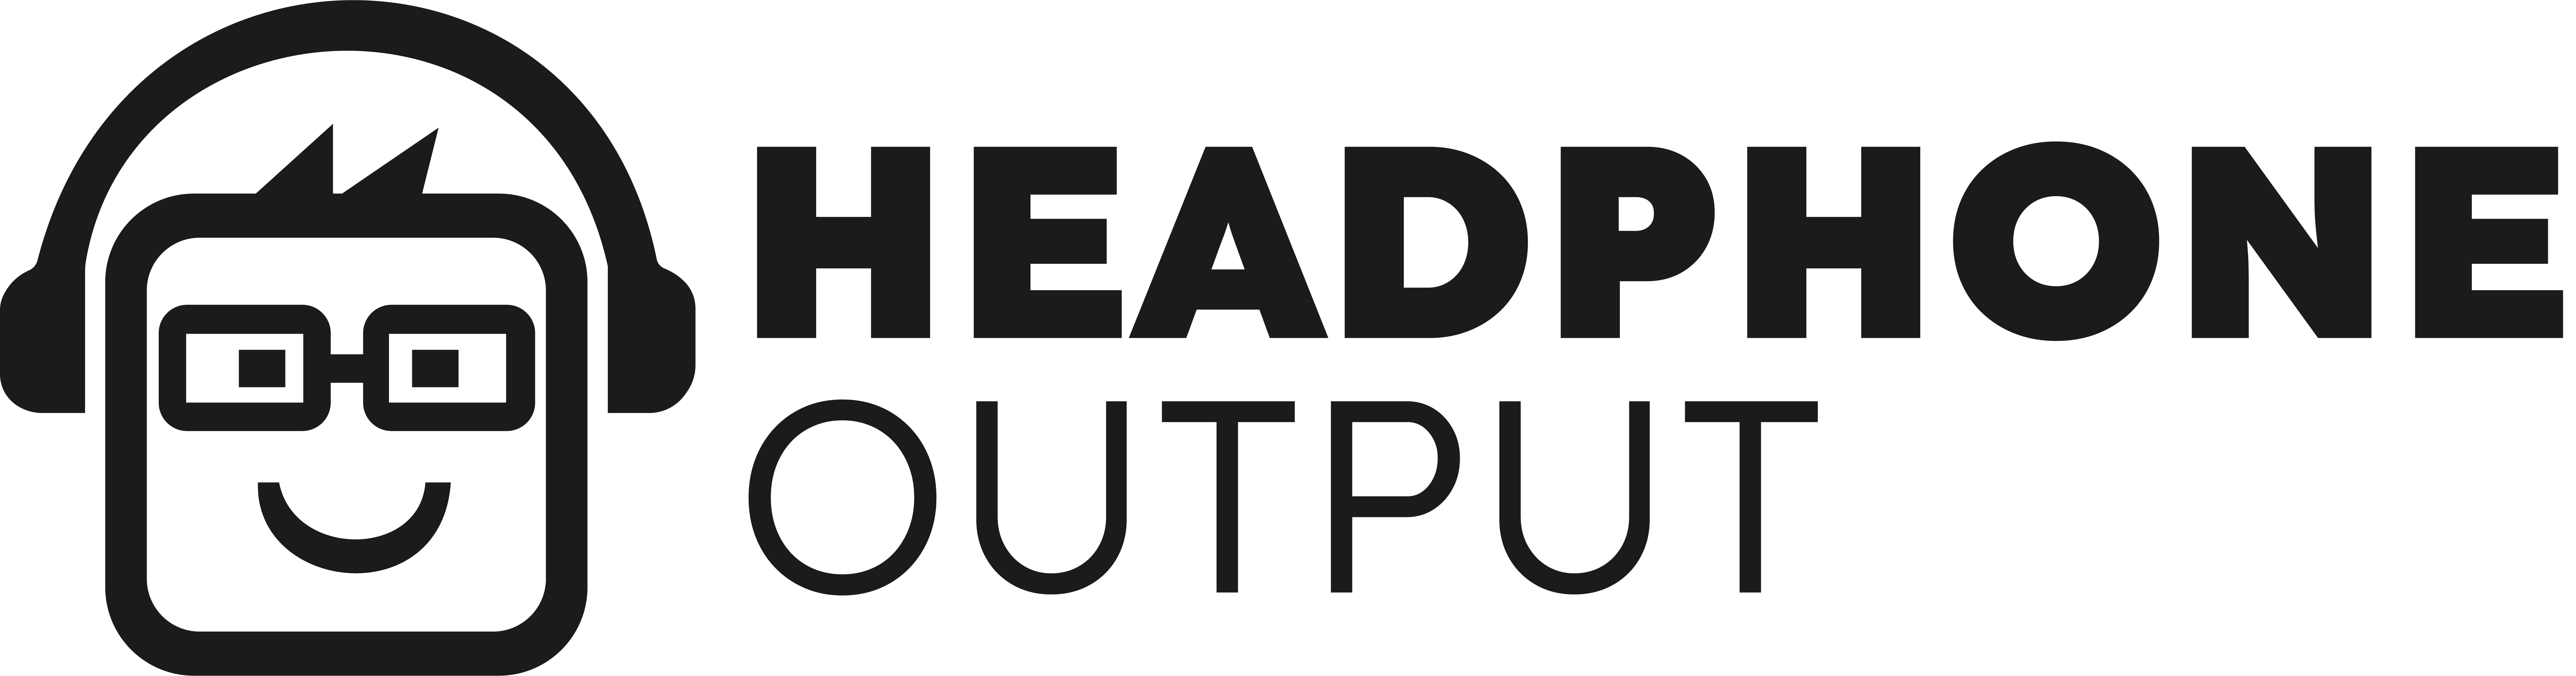 Headphone Output Logo